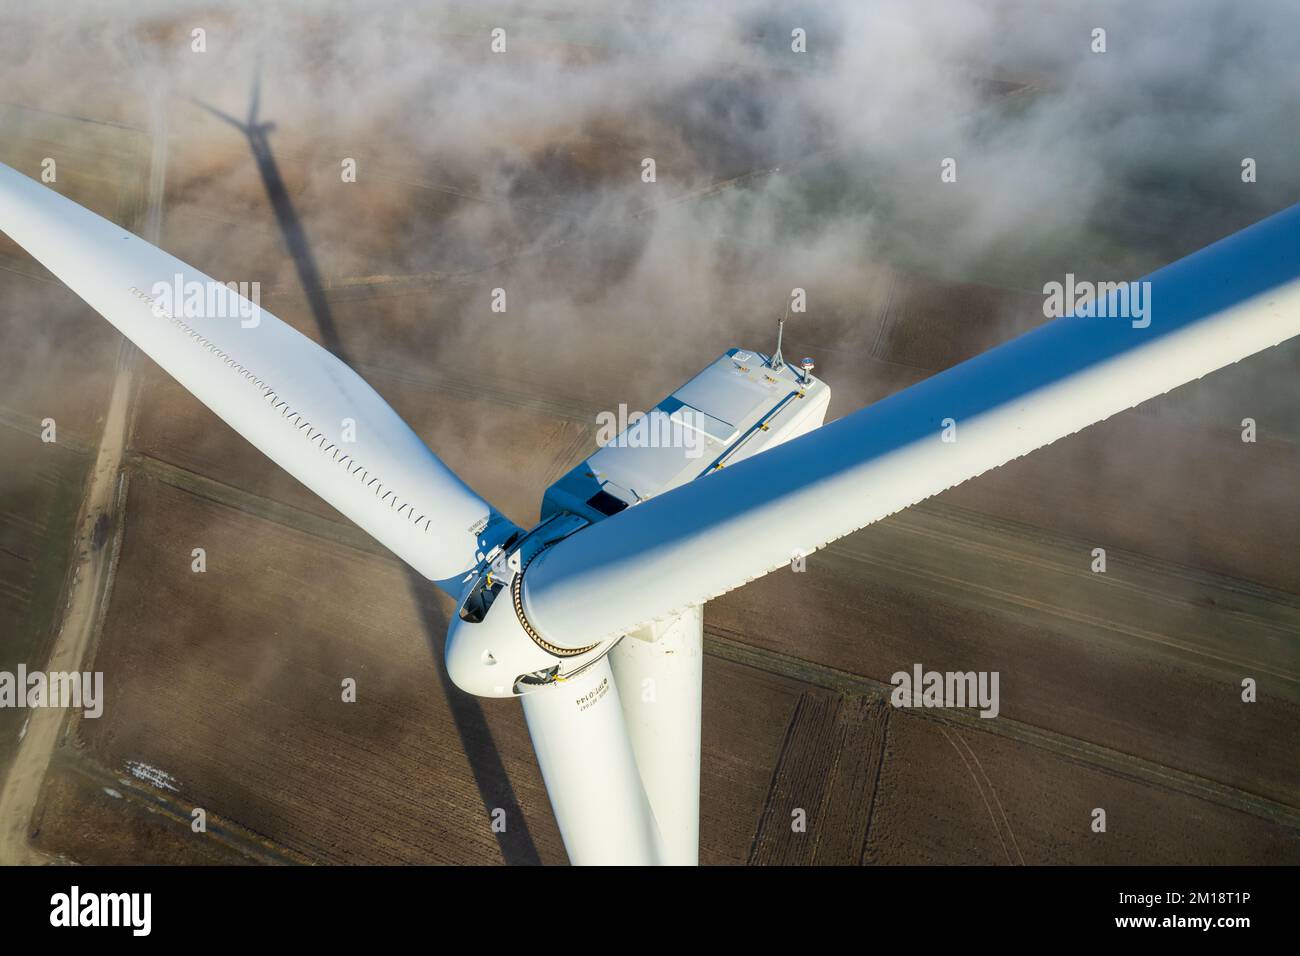 Aerial view of wind turbine Stock Photo